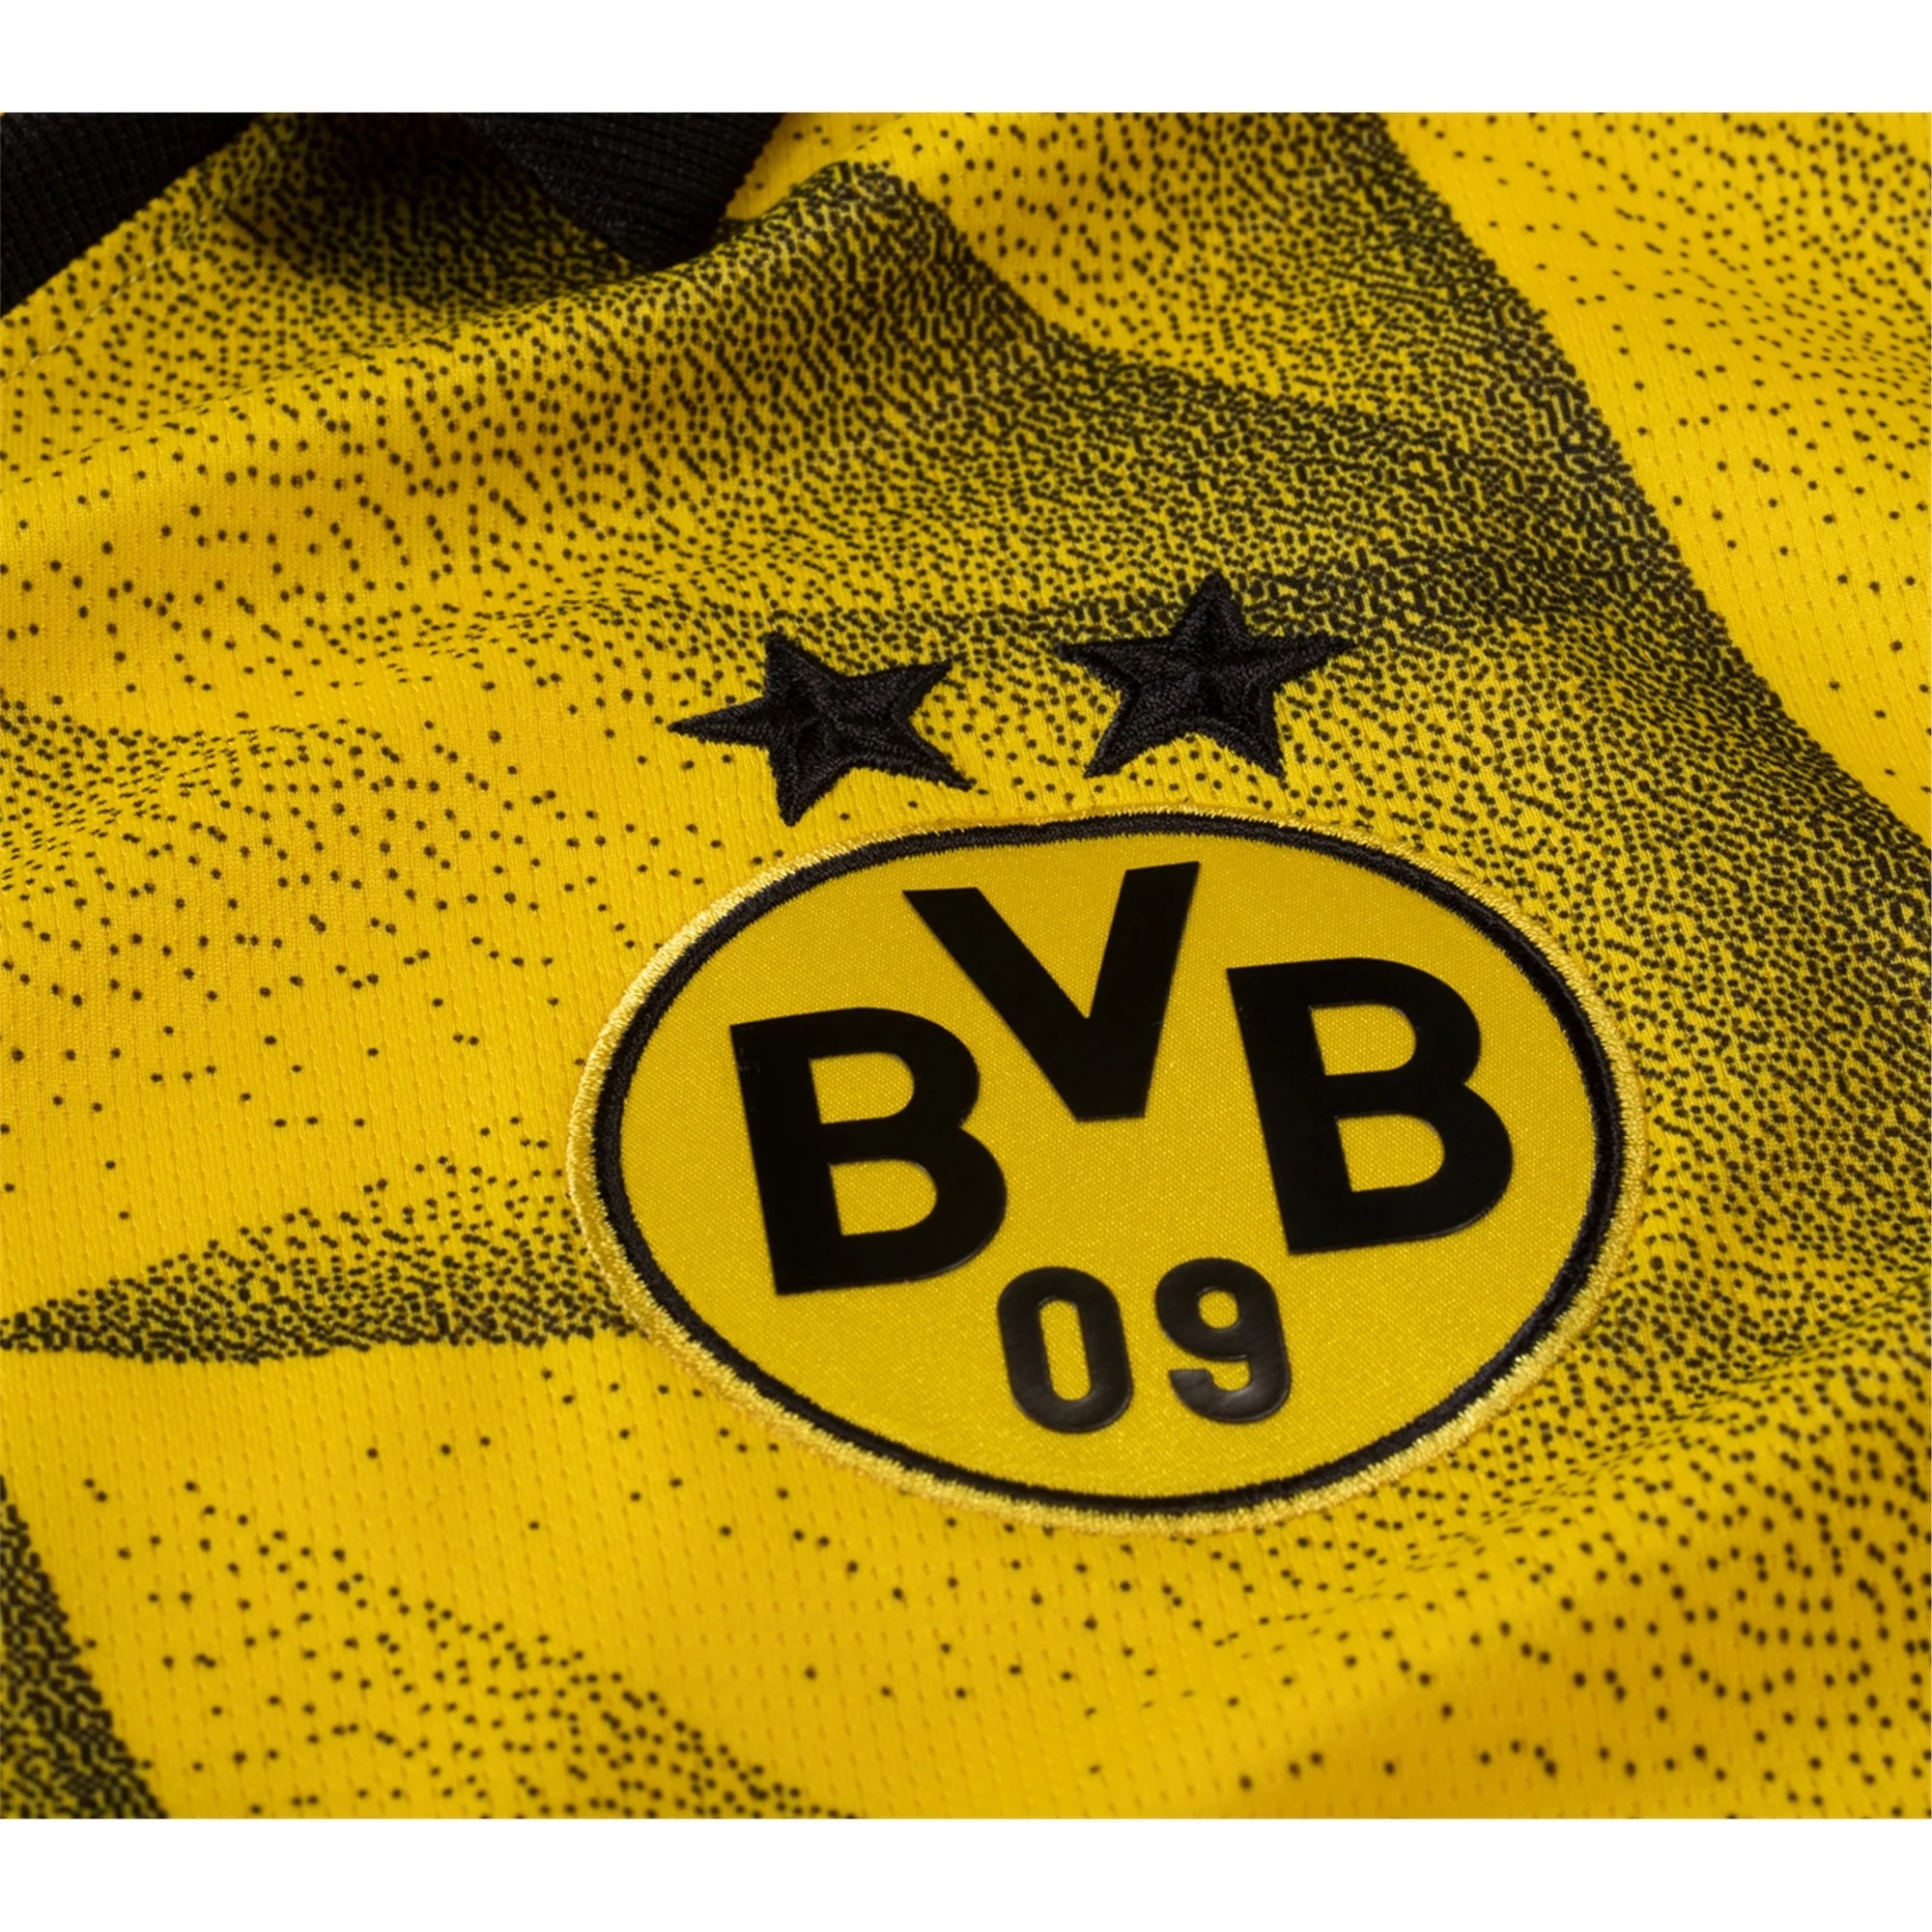 23/24 Dortmund Special Edition Jersey